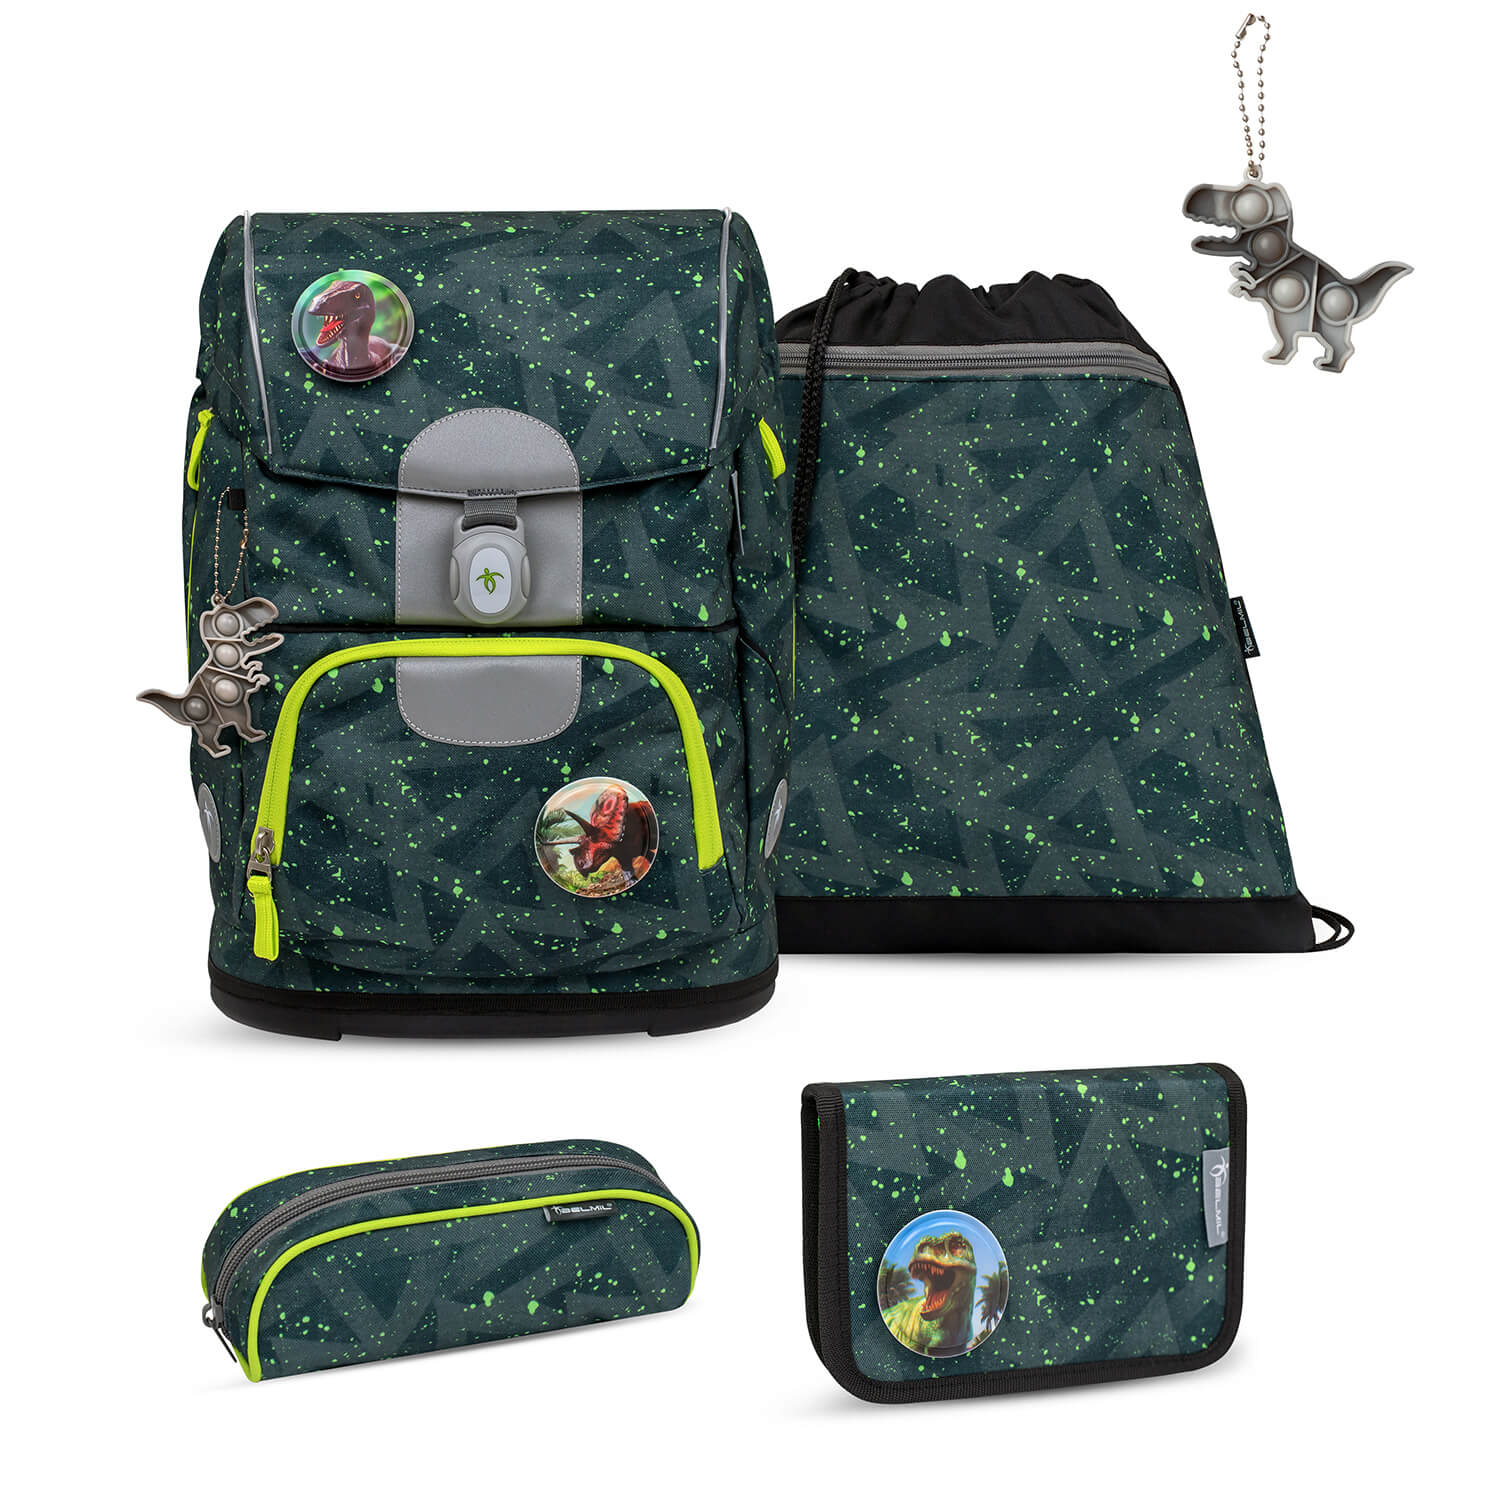 Motion Green Splash schoolbag set 6 pcs with GRATIS keychain